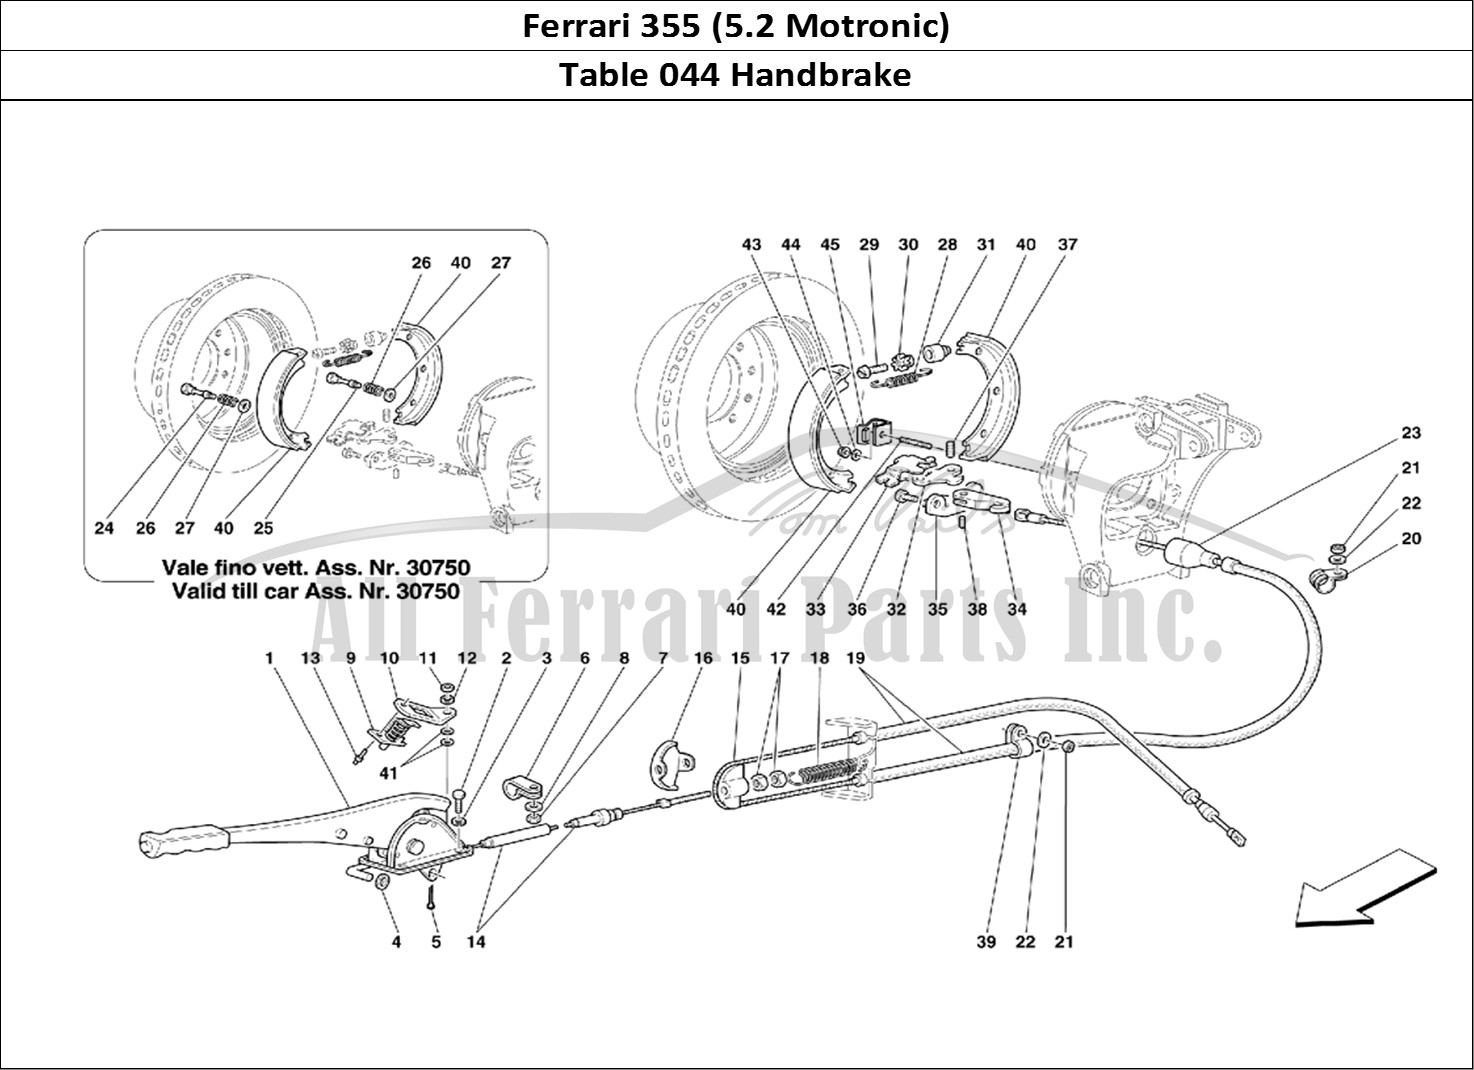 Ferrari Parts Ferrari 355 (5.2 Motronic) Page 044 Hand-Brake Control